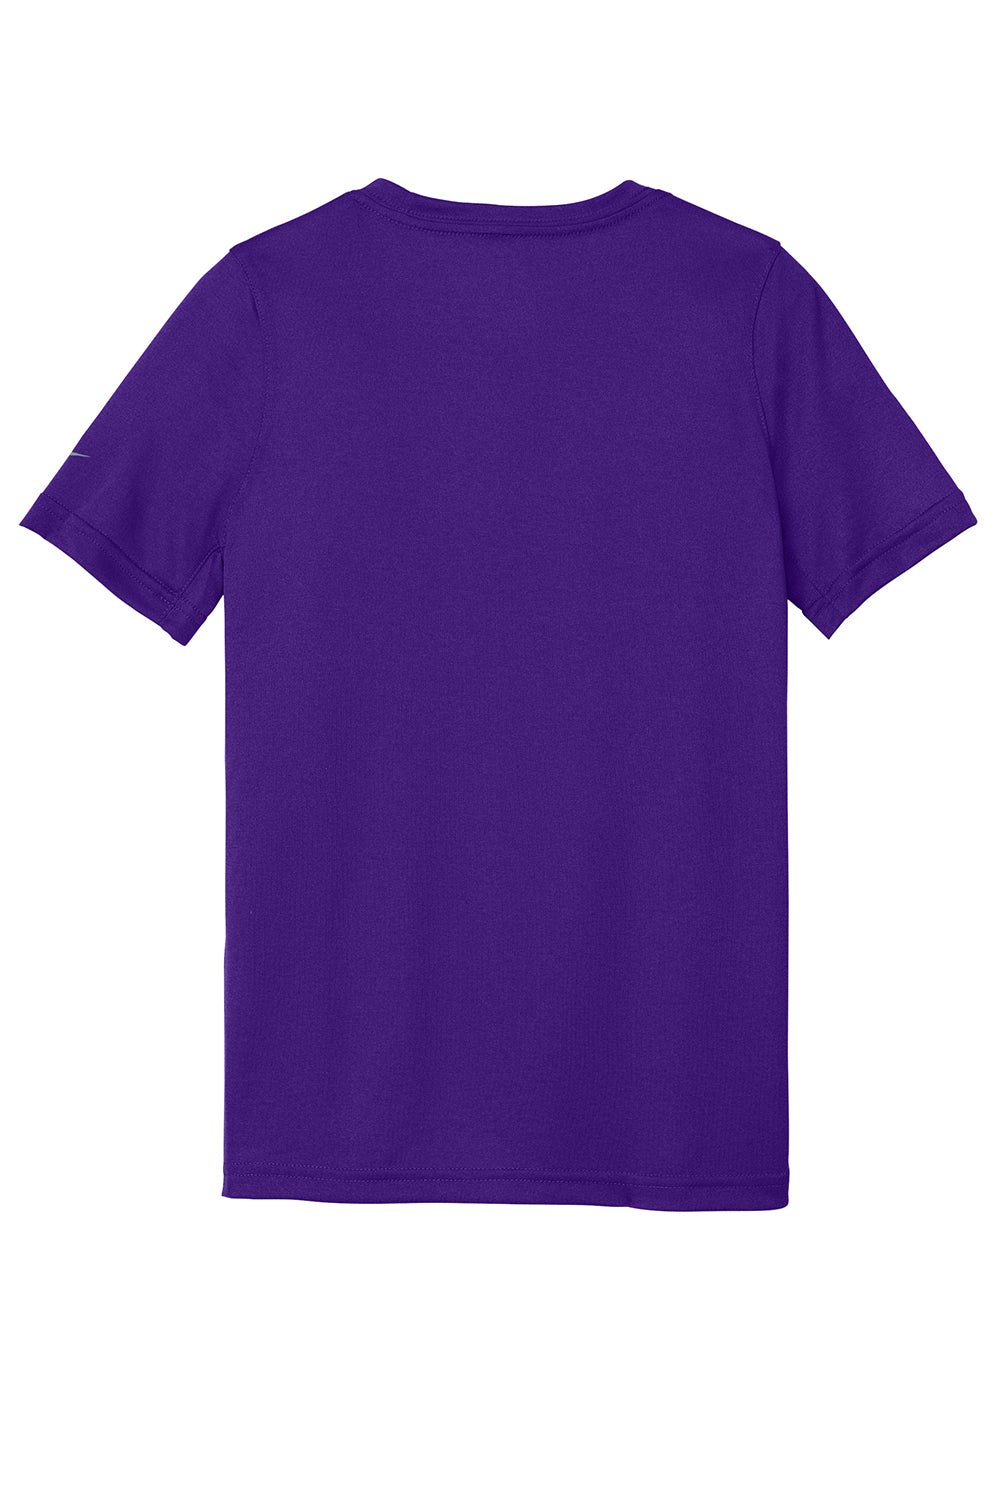 Nike NKDX8787 Youth rLegend Dri-Fit Moisture Wicking Short Sleeve Crewneck T-Shirt Court Purple Flat Back